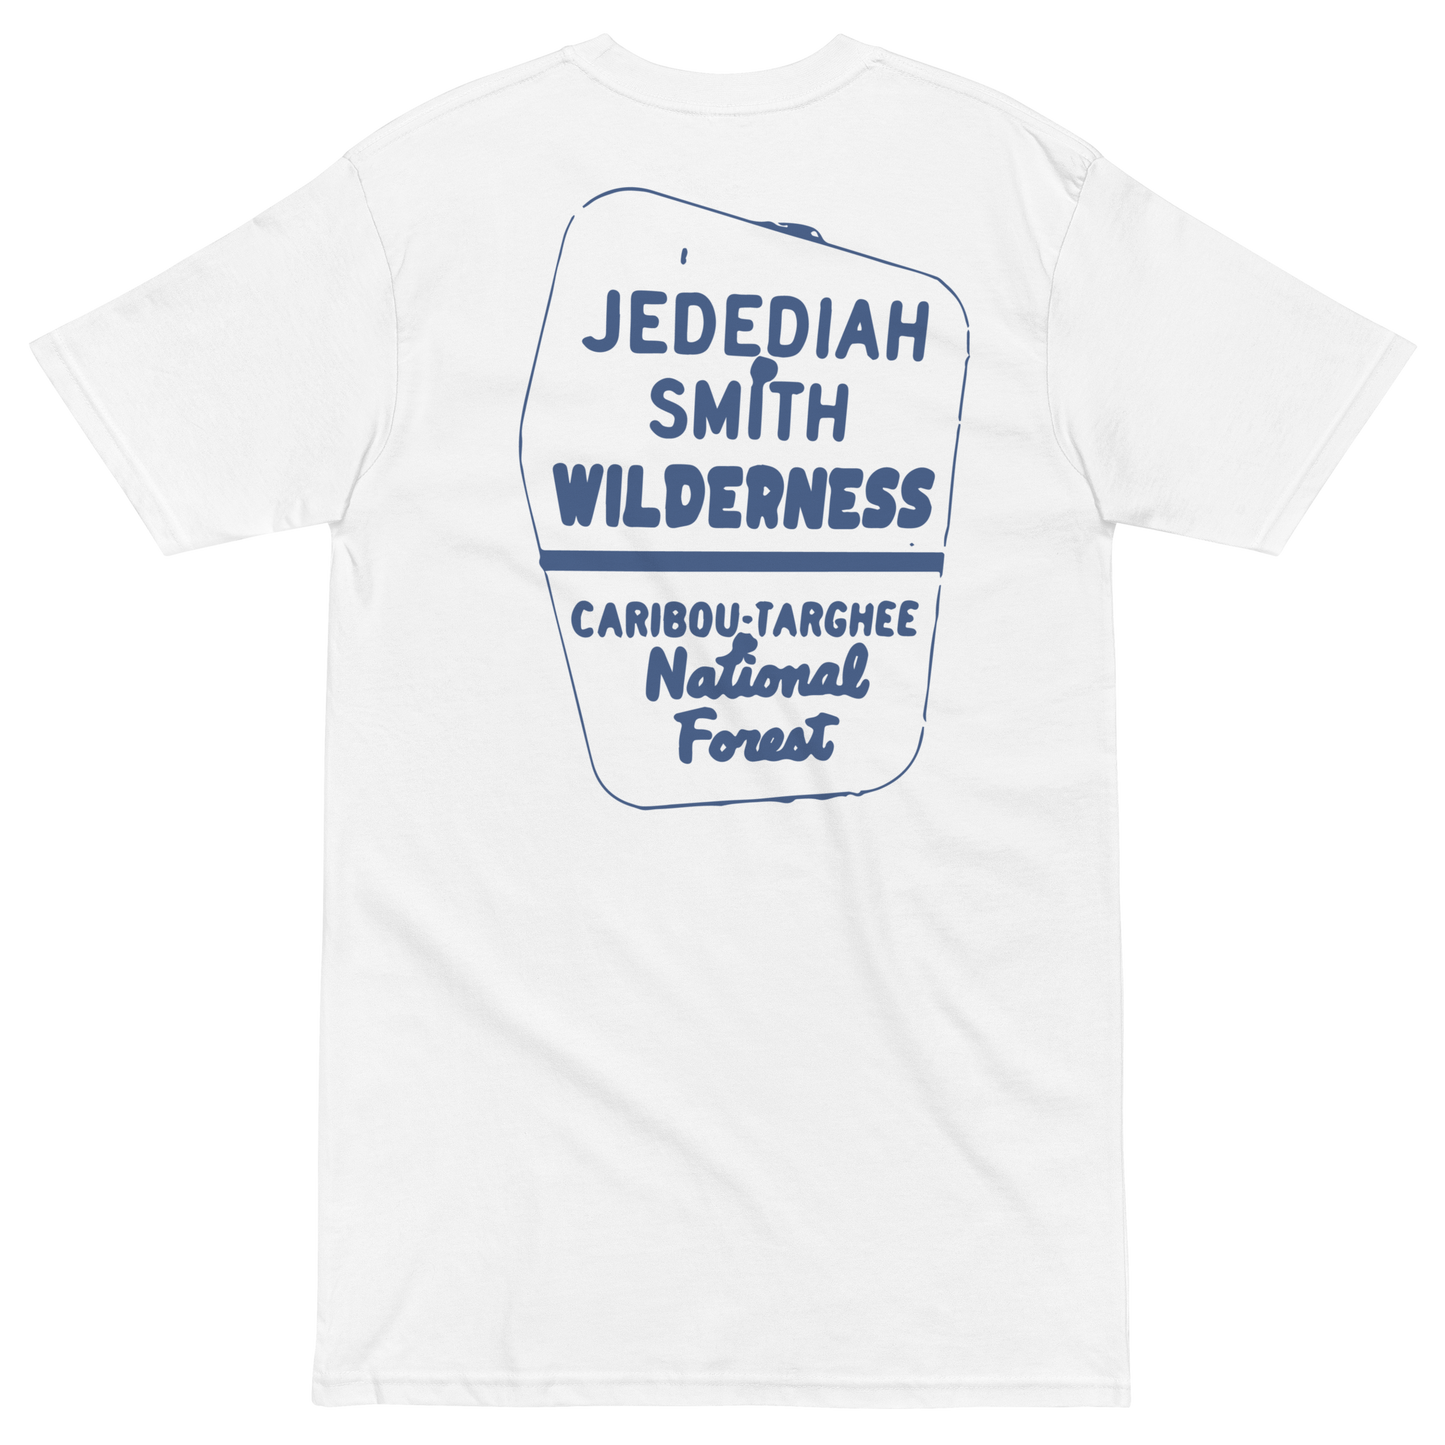 Tenmore. Jedediah Smith Wilderness Tee